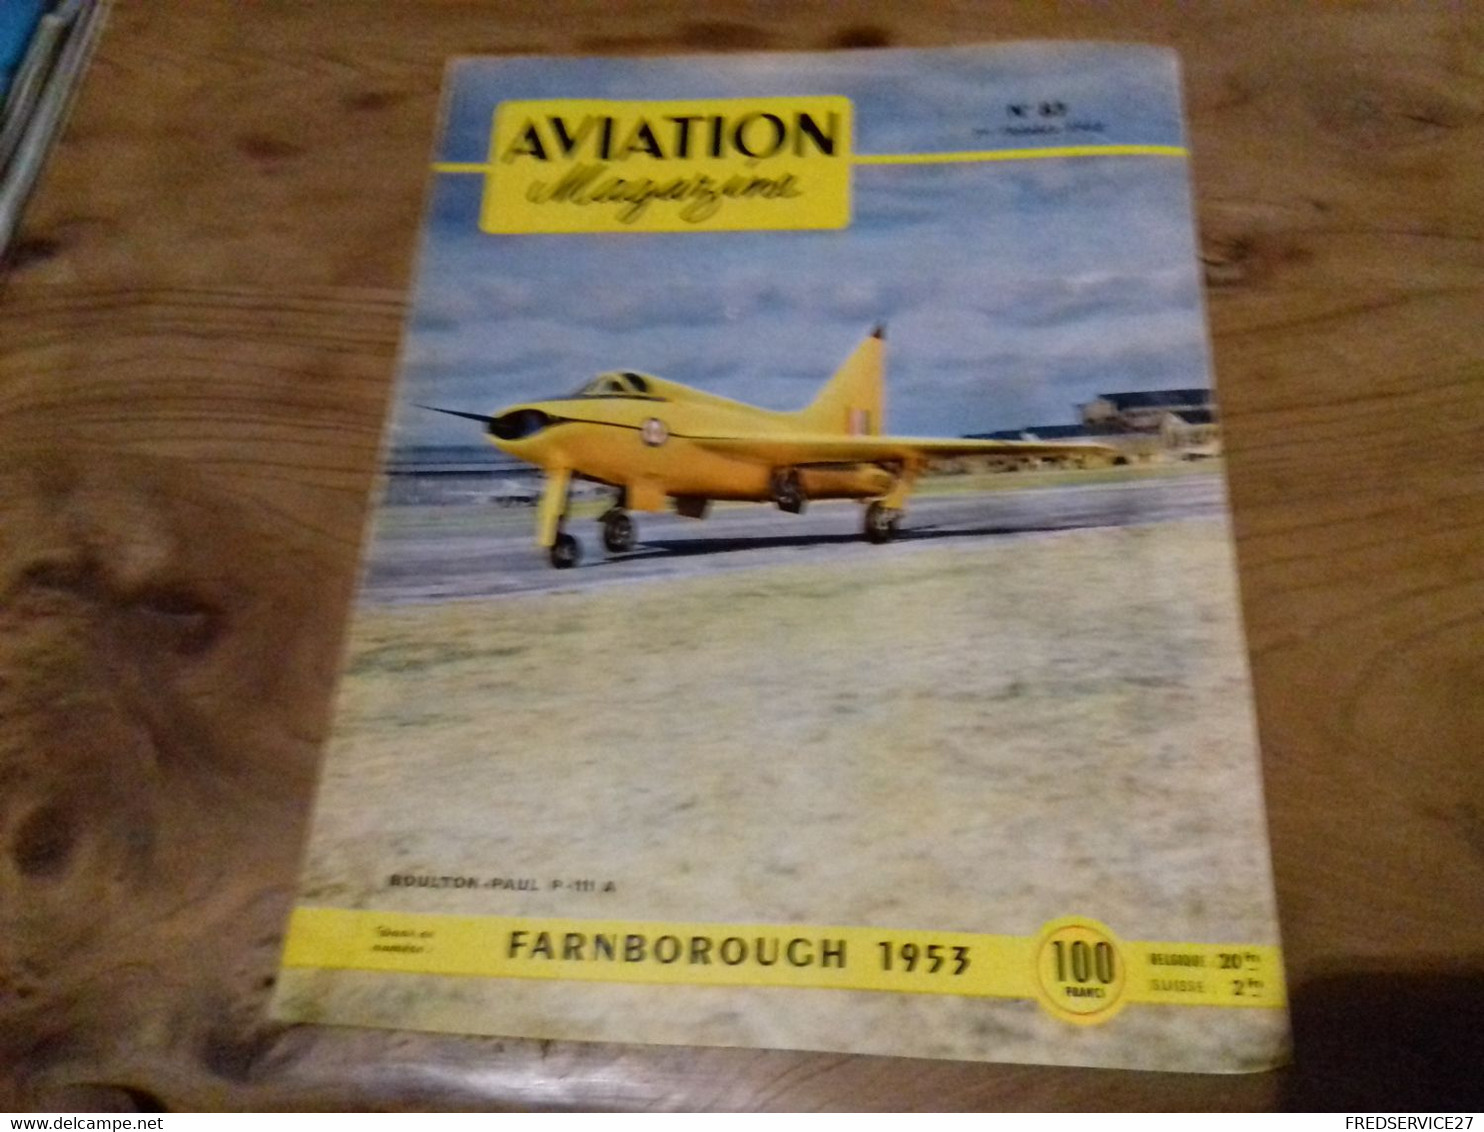 40/ AVIATION MAGAZINE N° 83 1953 BOULTON PAUL P 111 A / FARNBOROUGGH 1953 ECT - Aviation